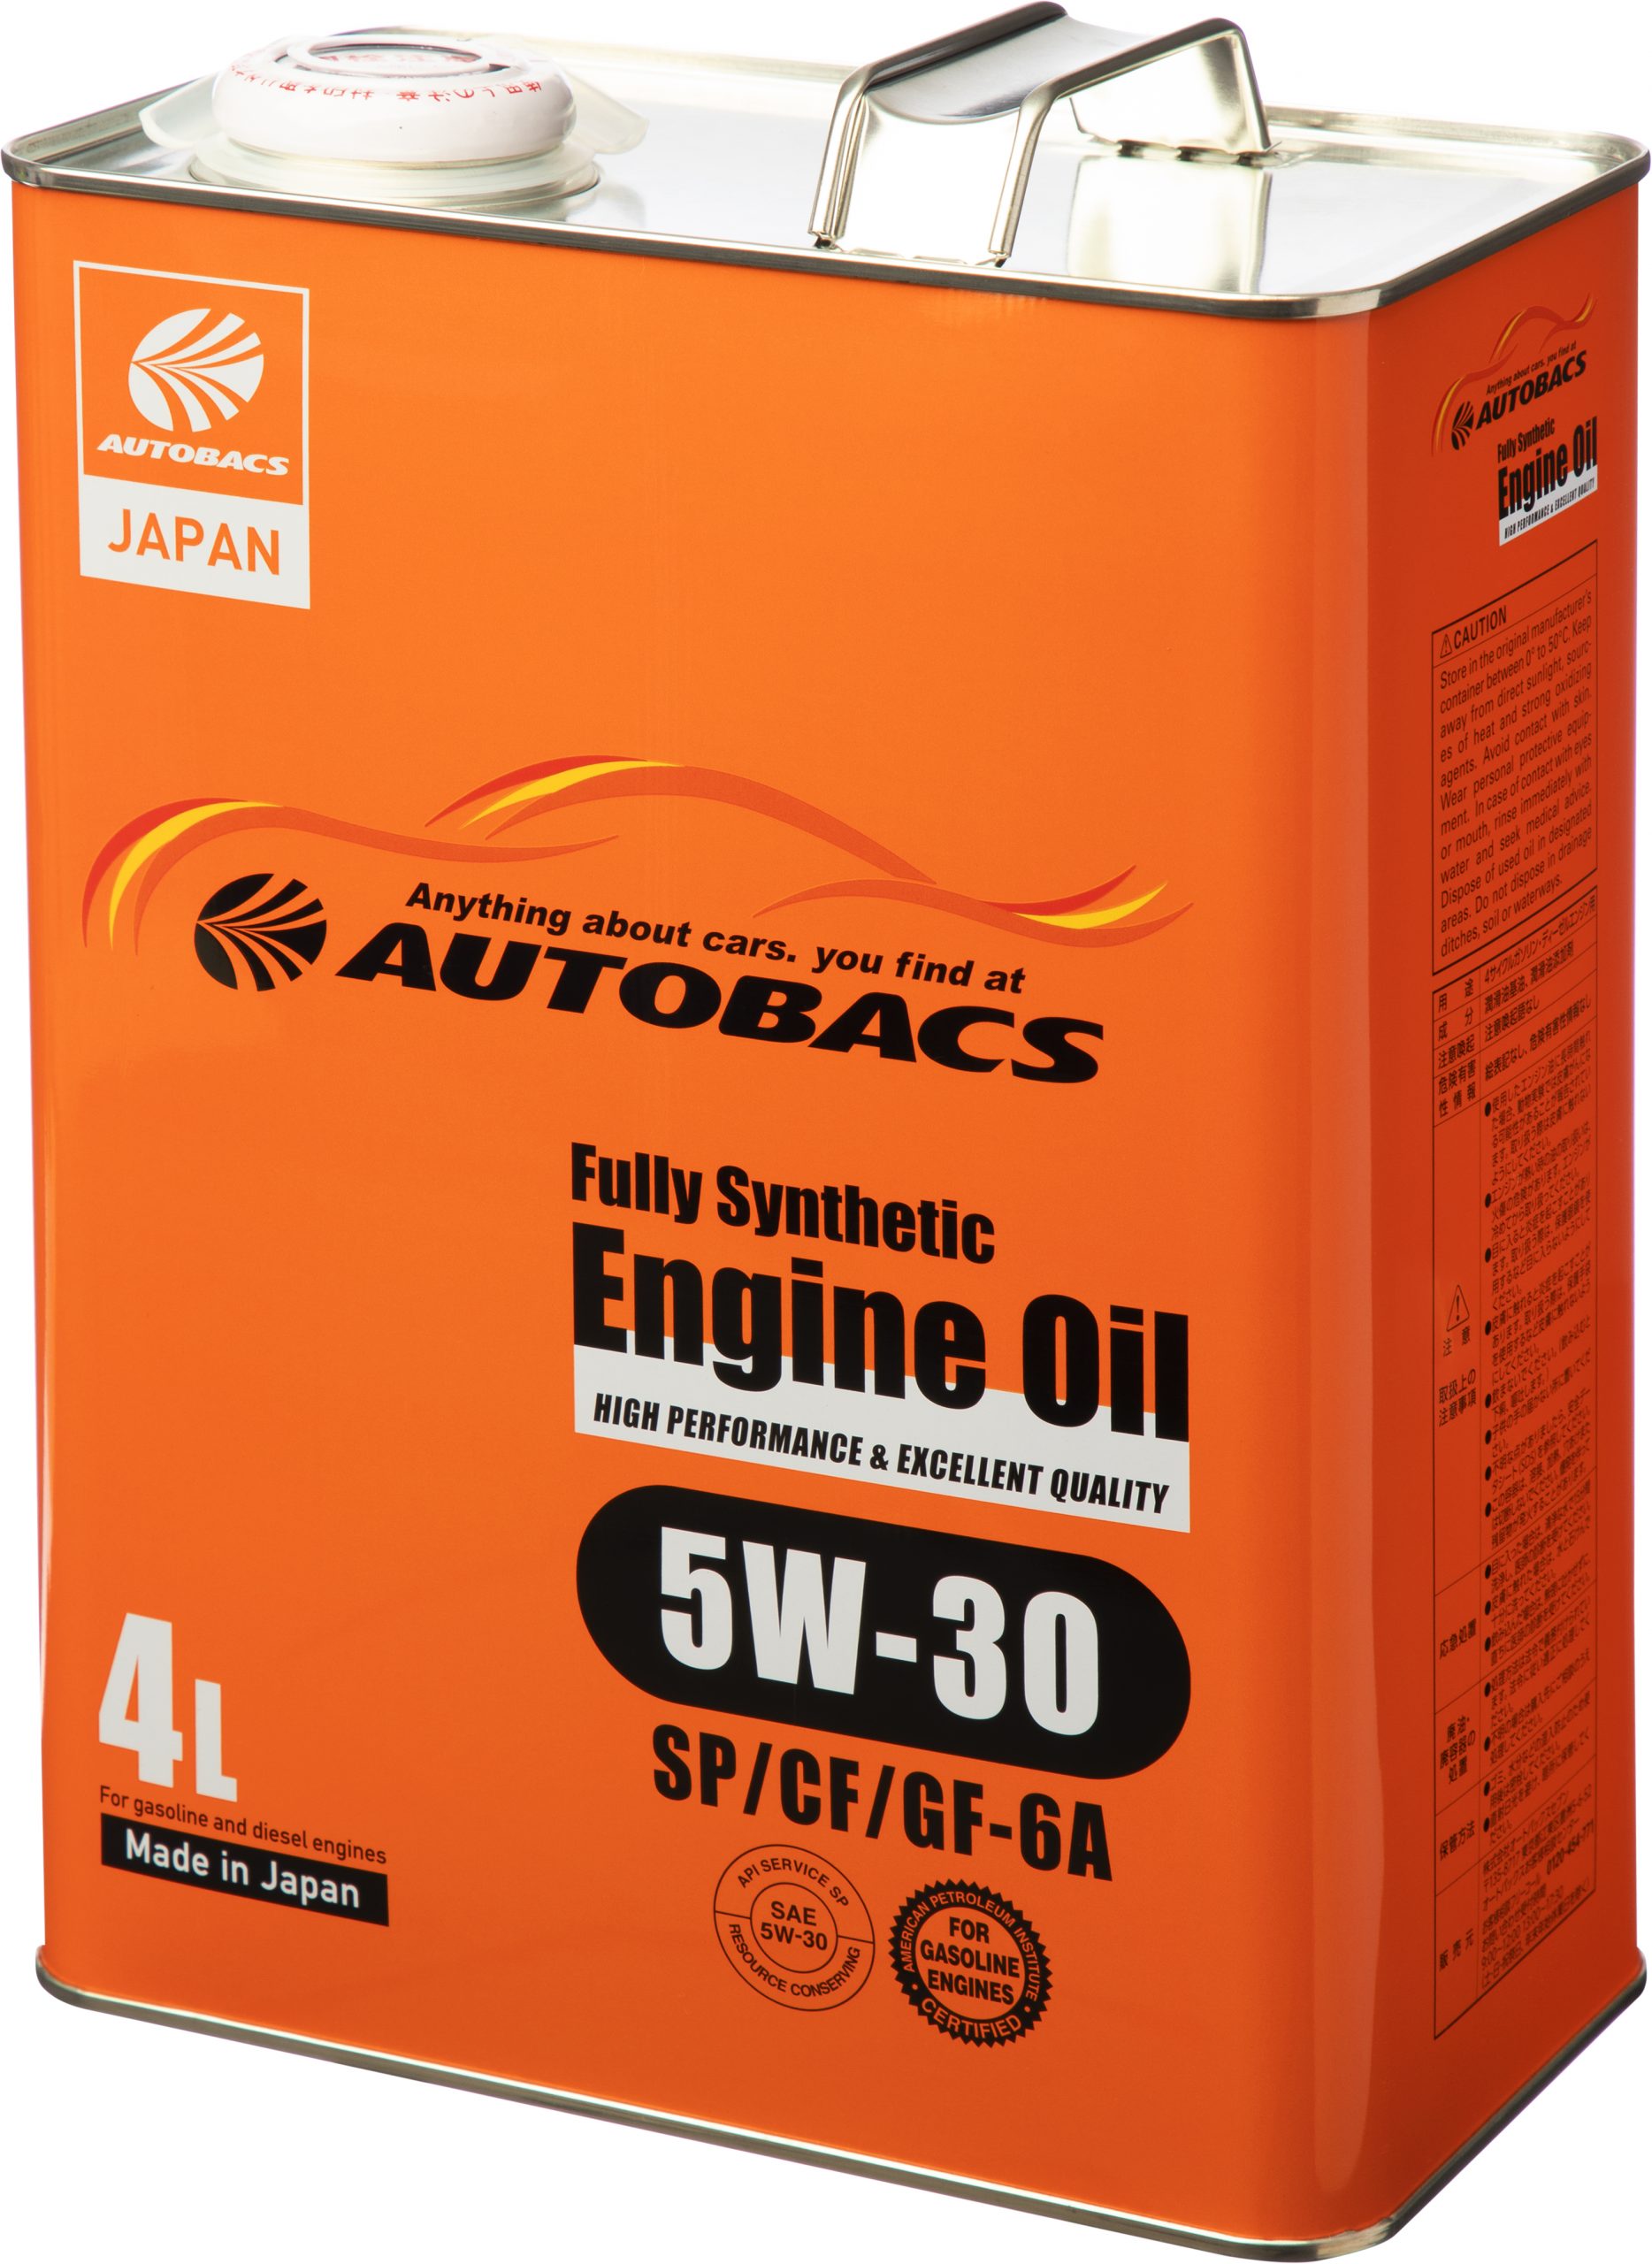 Autobacs Fully Synthetics Engine Oil 5W-30 - auto2u